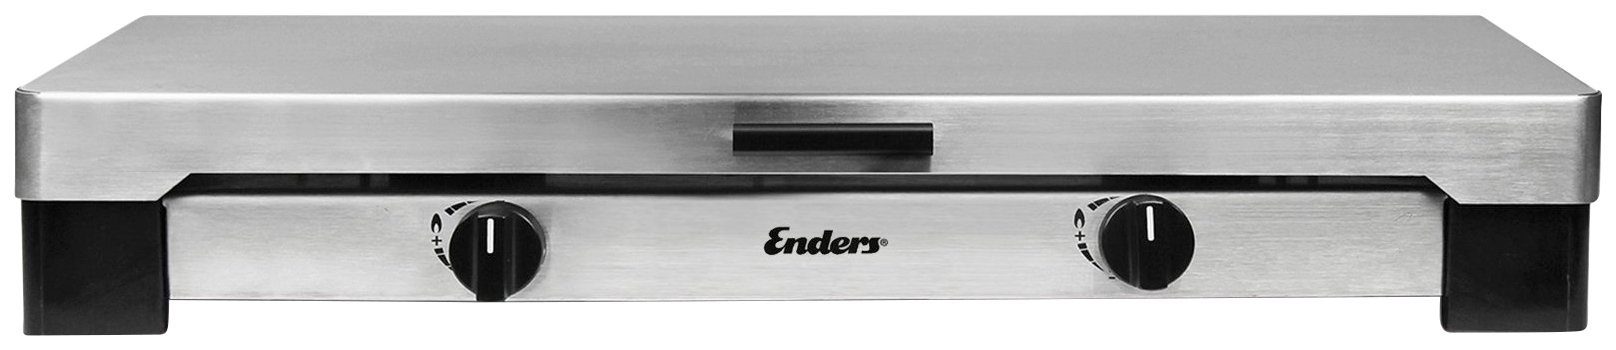 Enders® Gaskocher Brisbane 2 2,3 Z, x 2 cm, Brenner 49x32x9 BxLxH: kW